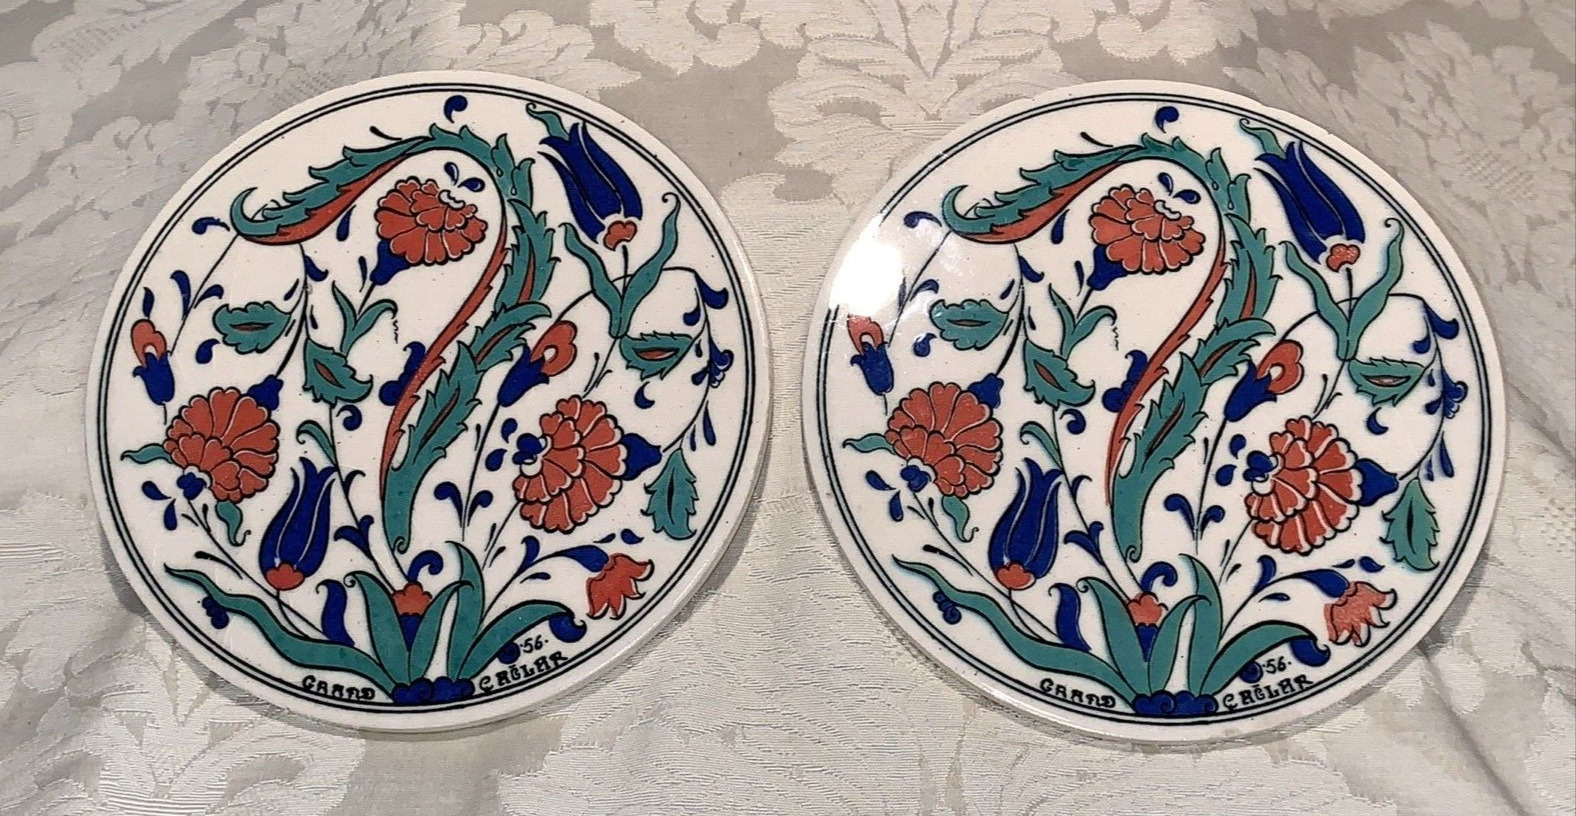 Pair of Vintage Hand-Painted Ceramic Tiles - 6 1/4